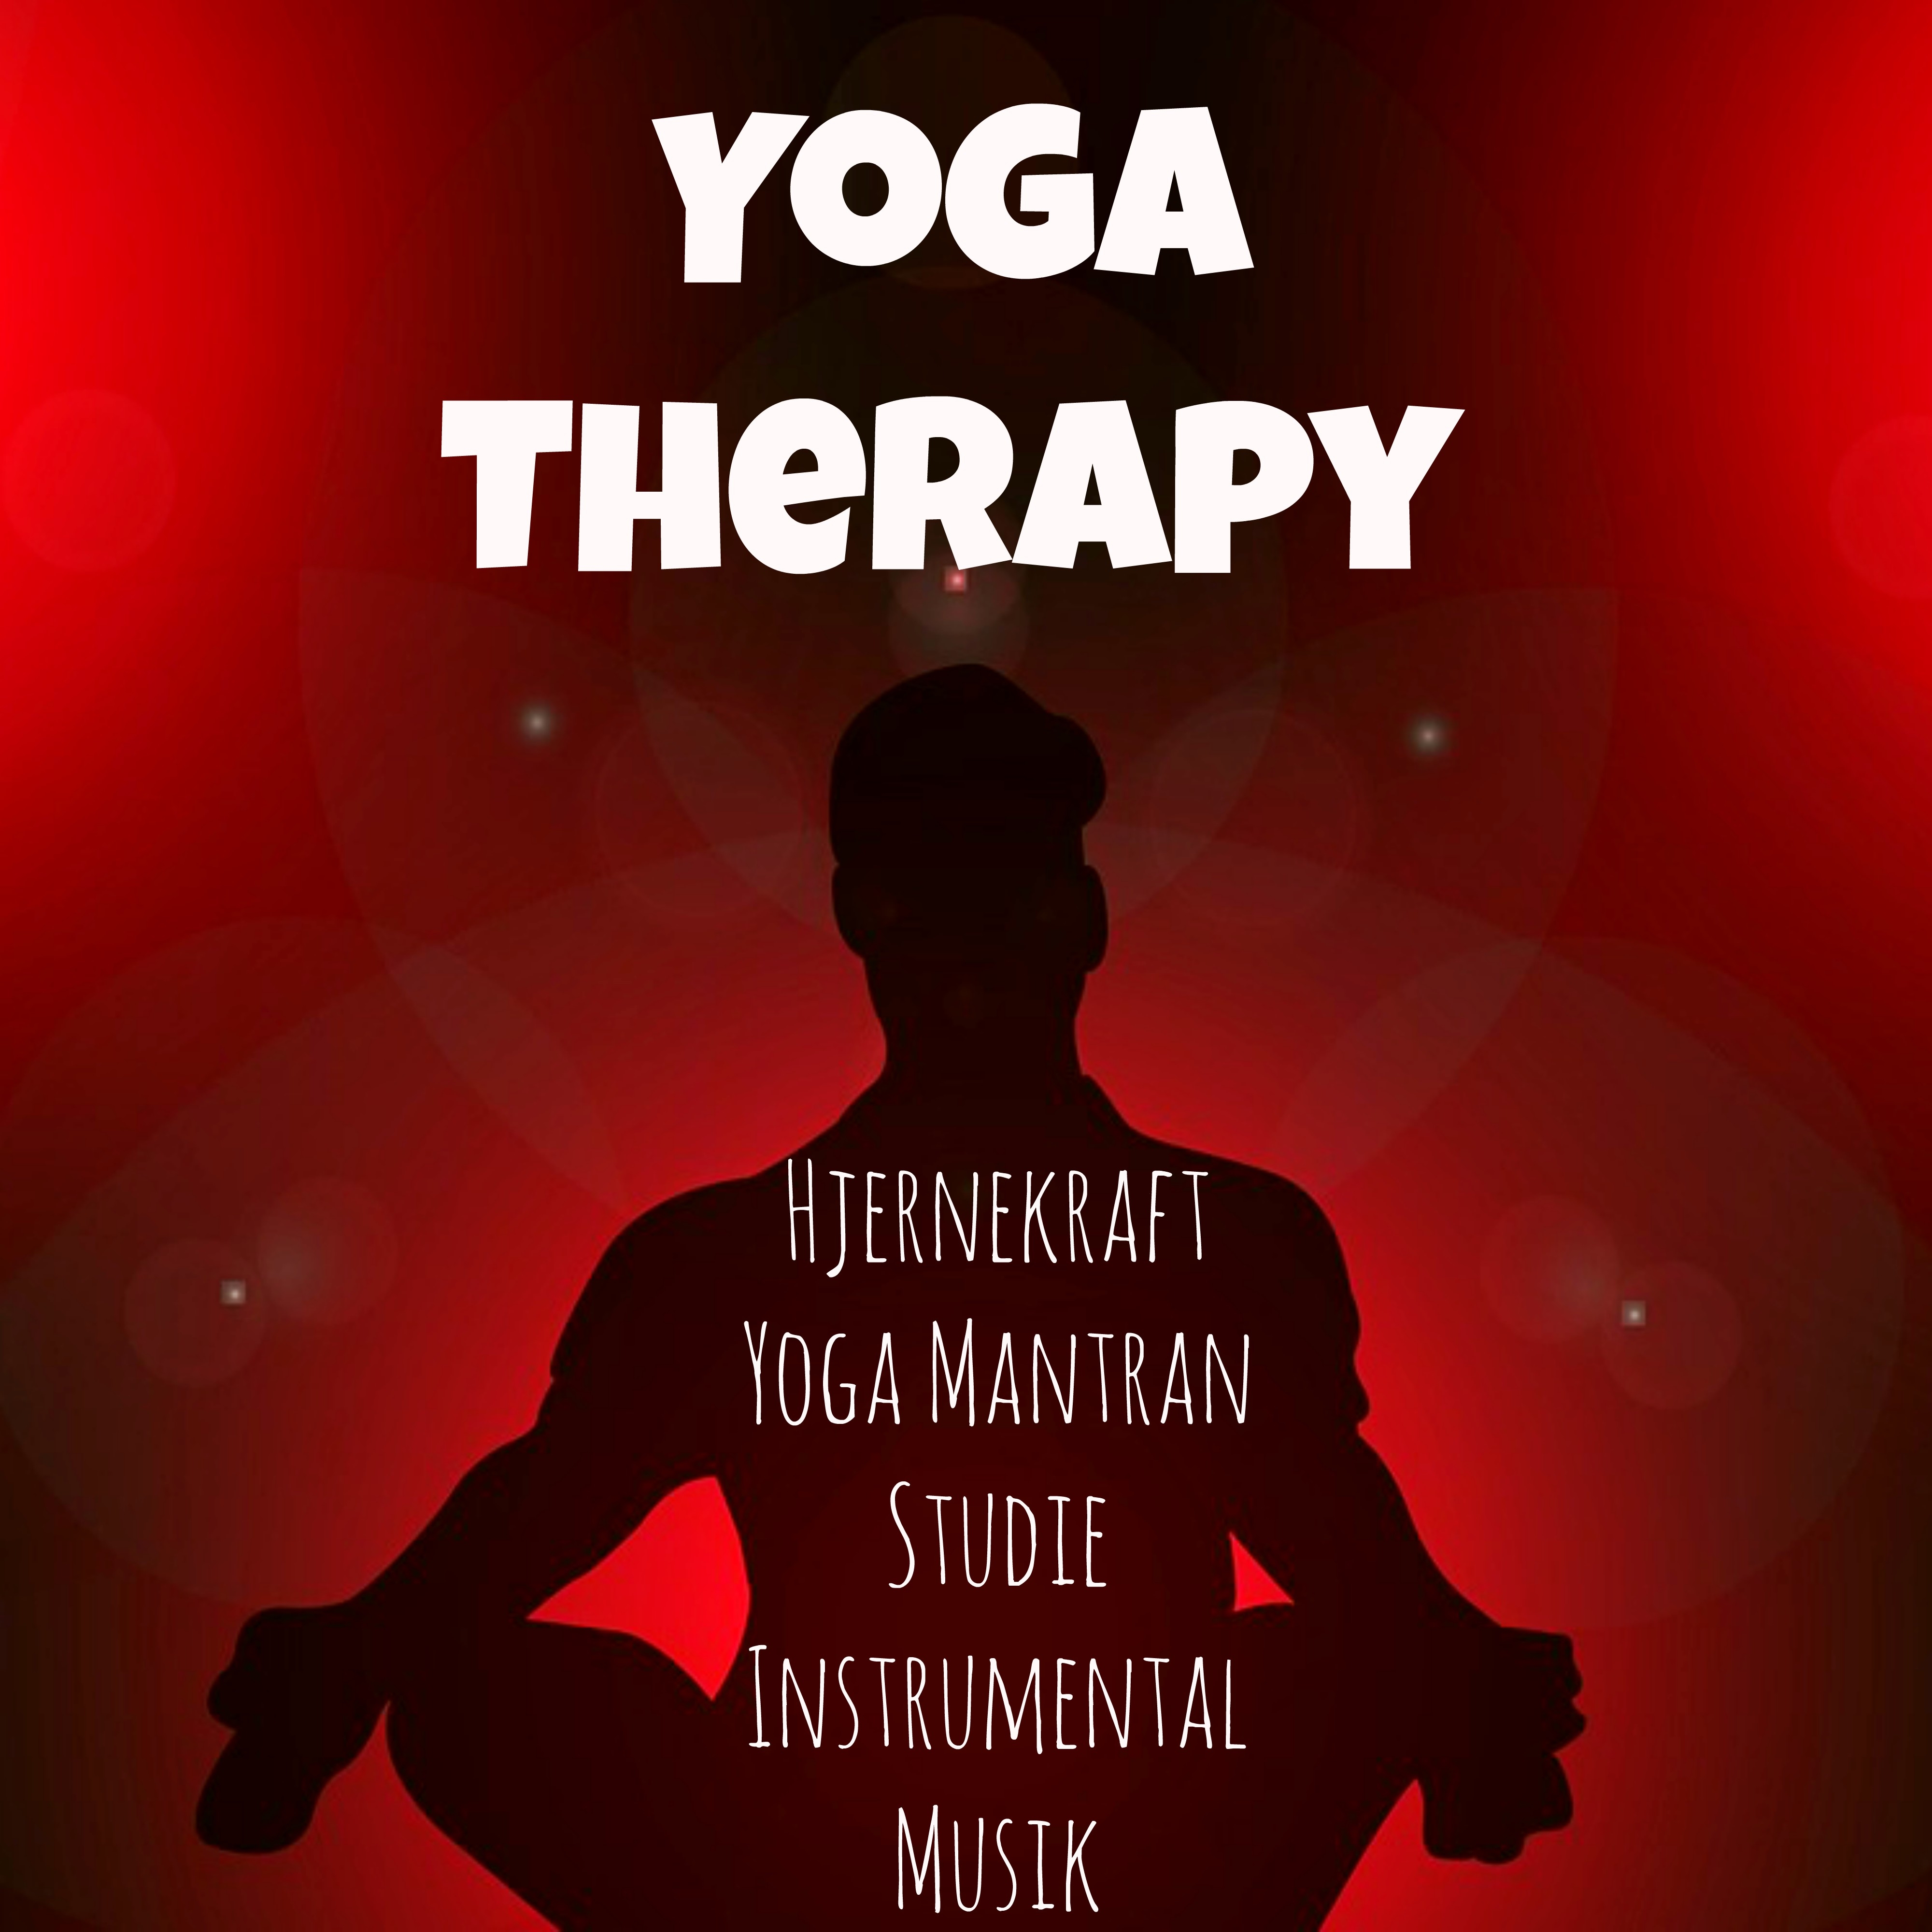 Yoga Therapy  Hjernekraft Yoga Mantran Studie Instrumental Musik f r Minska ngest Chakraf rger och B ttre S mn